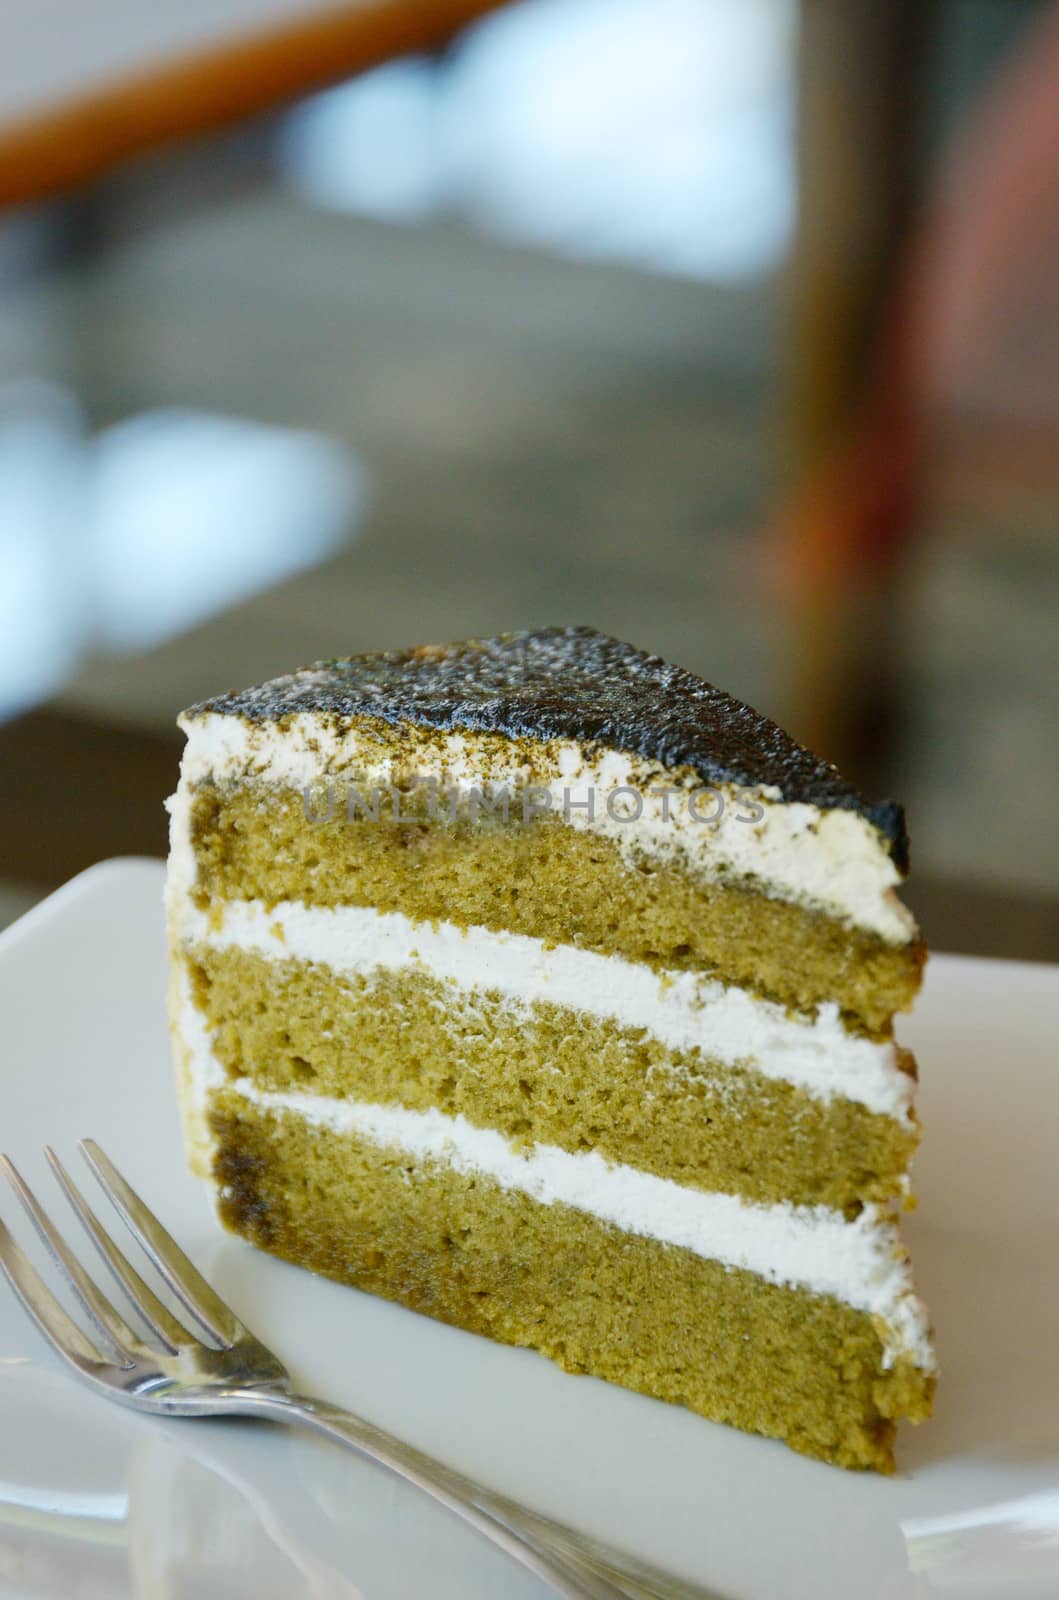 Matcha green tea cake by pixbox77